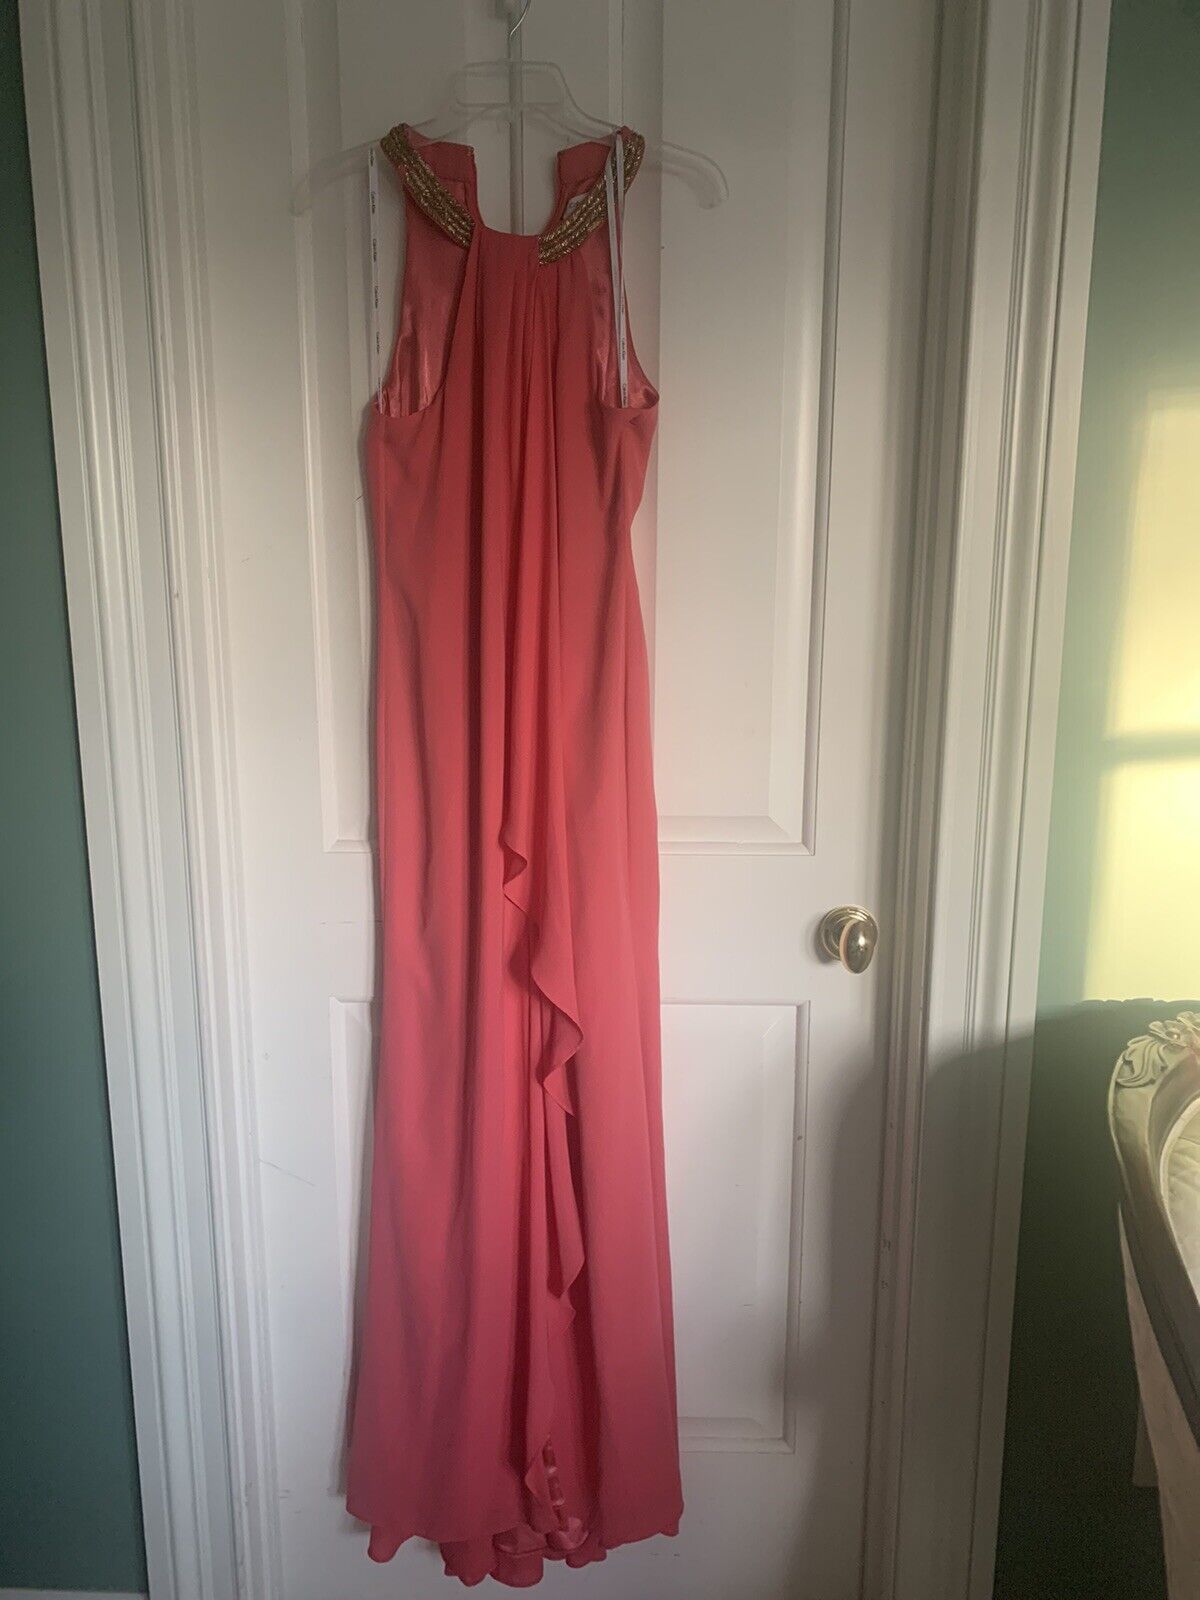 Calvin Klein Size 6 Prom Halter Sequined Orange A-line Dress on Queenly